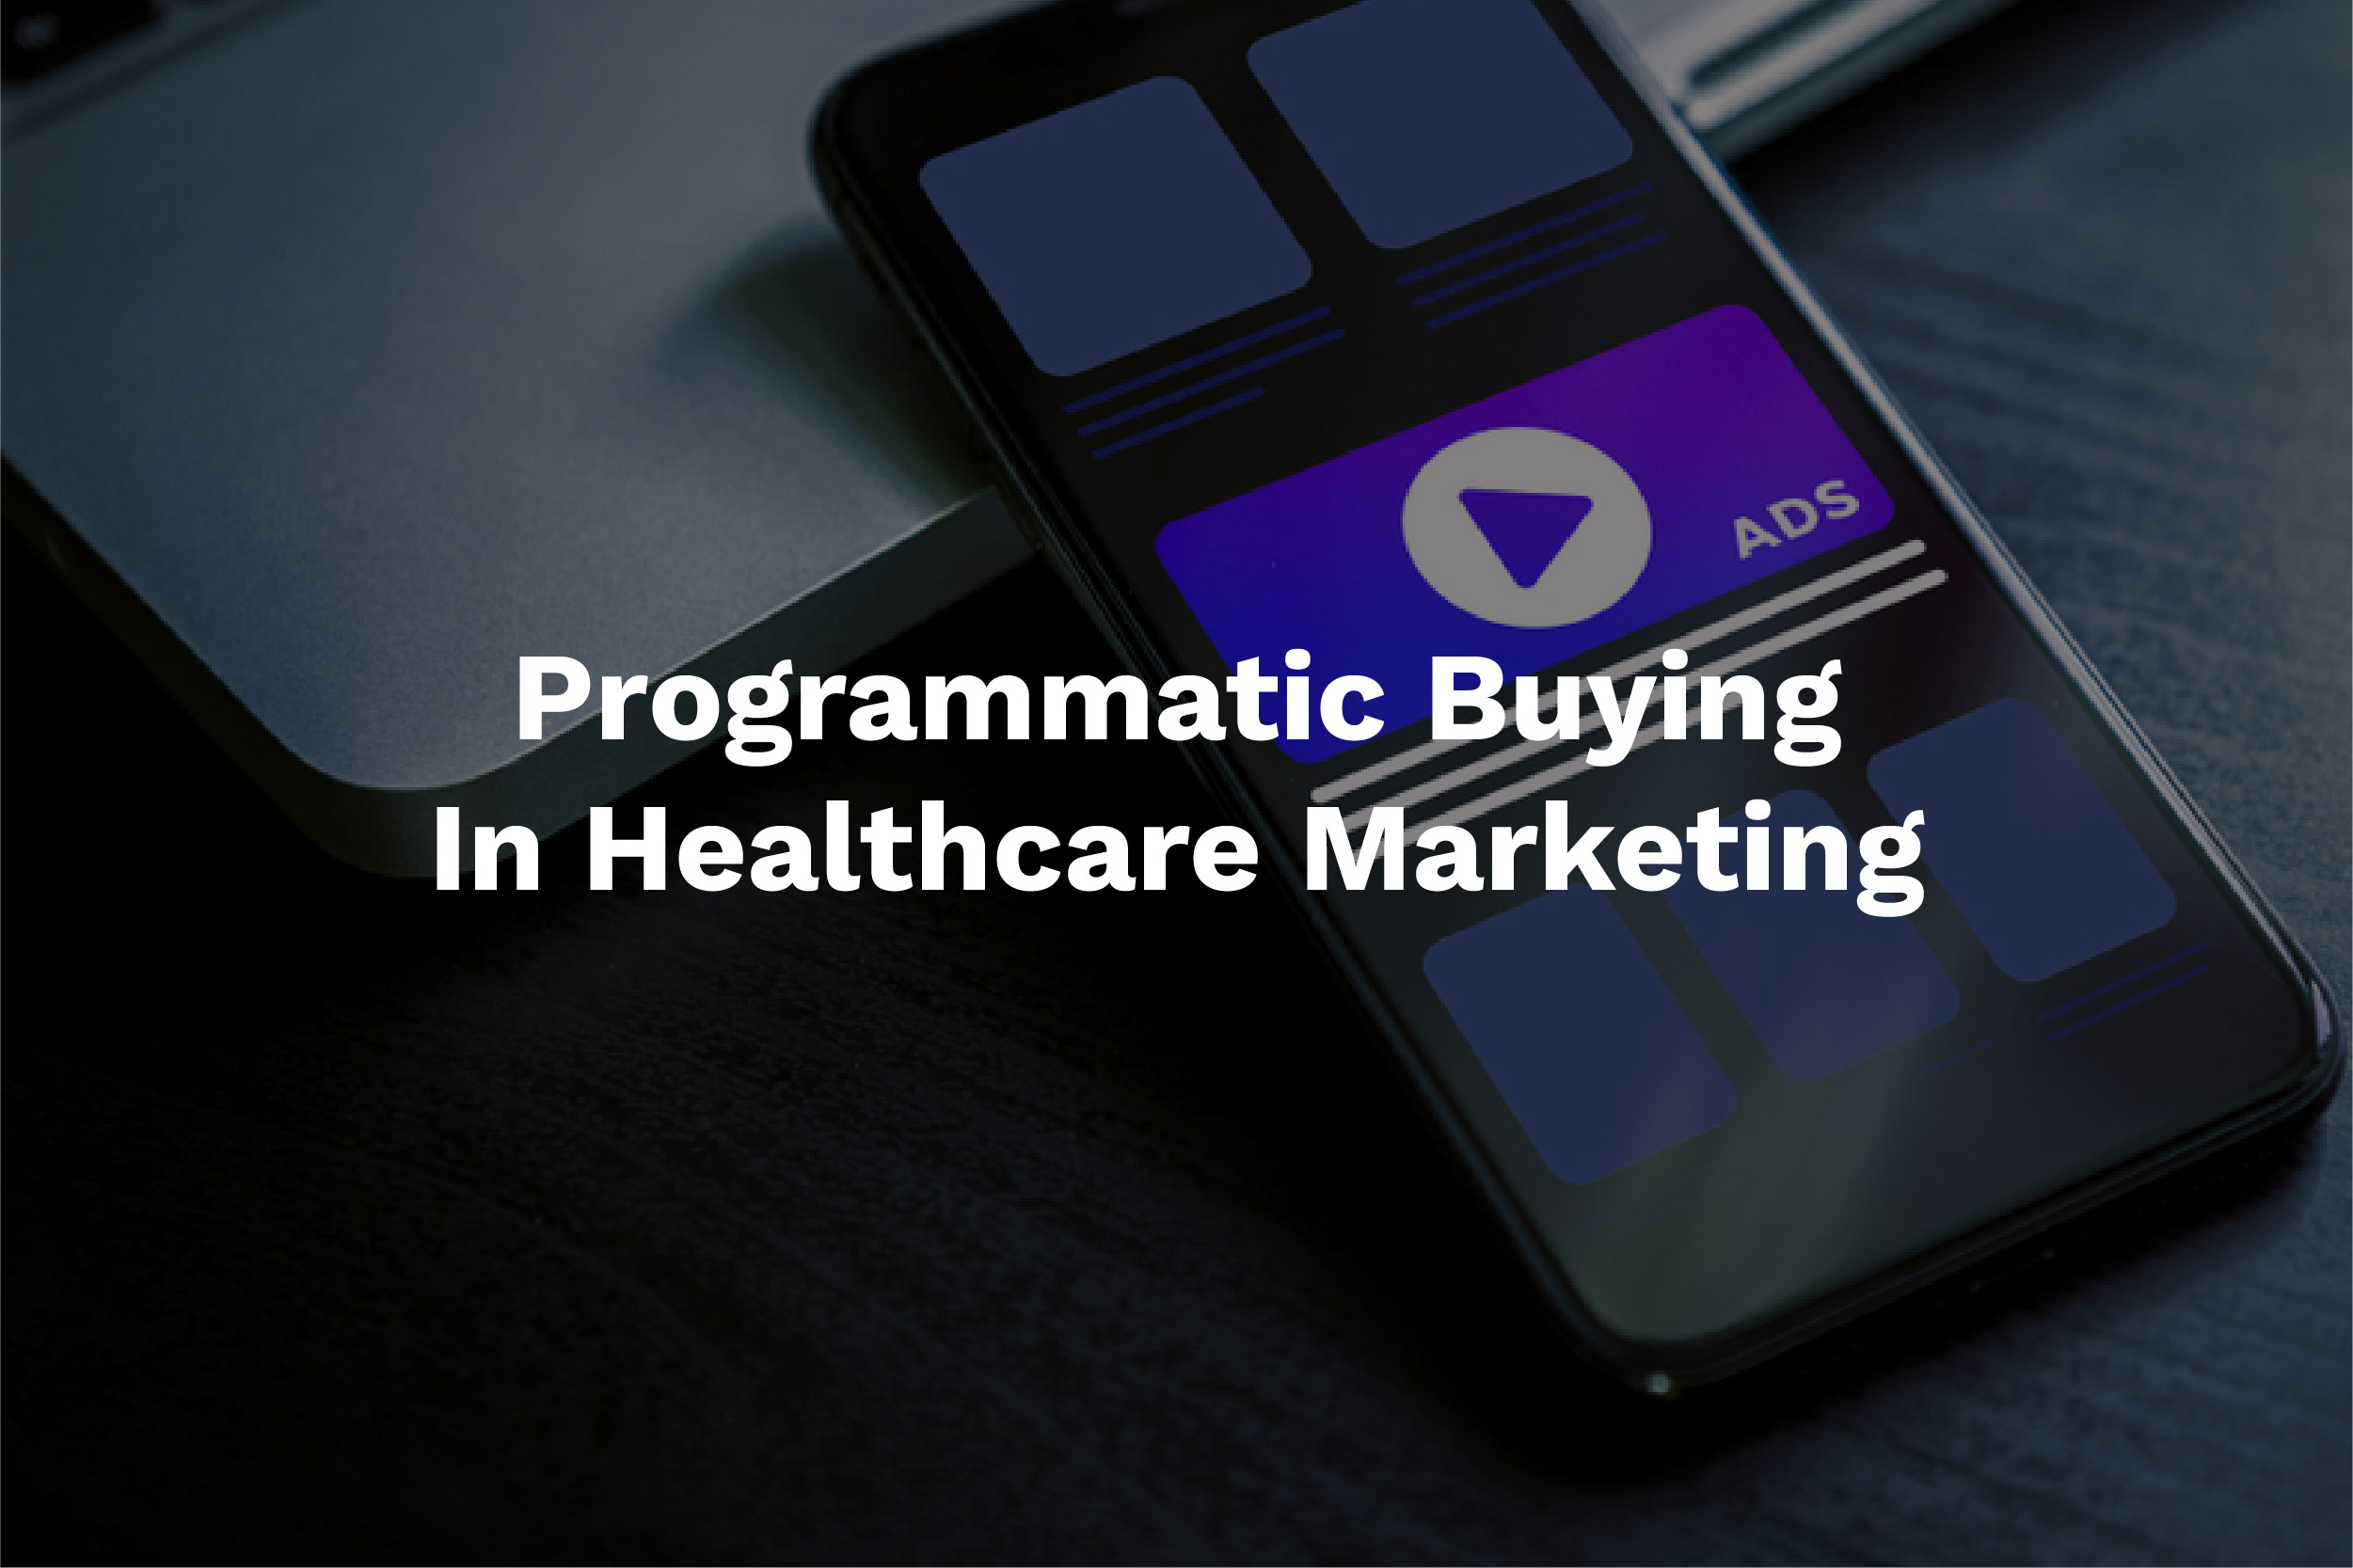 Factors of Programmatic Buying In Healthcare Marketing